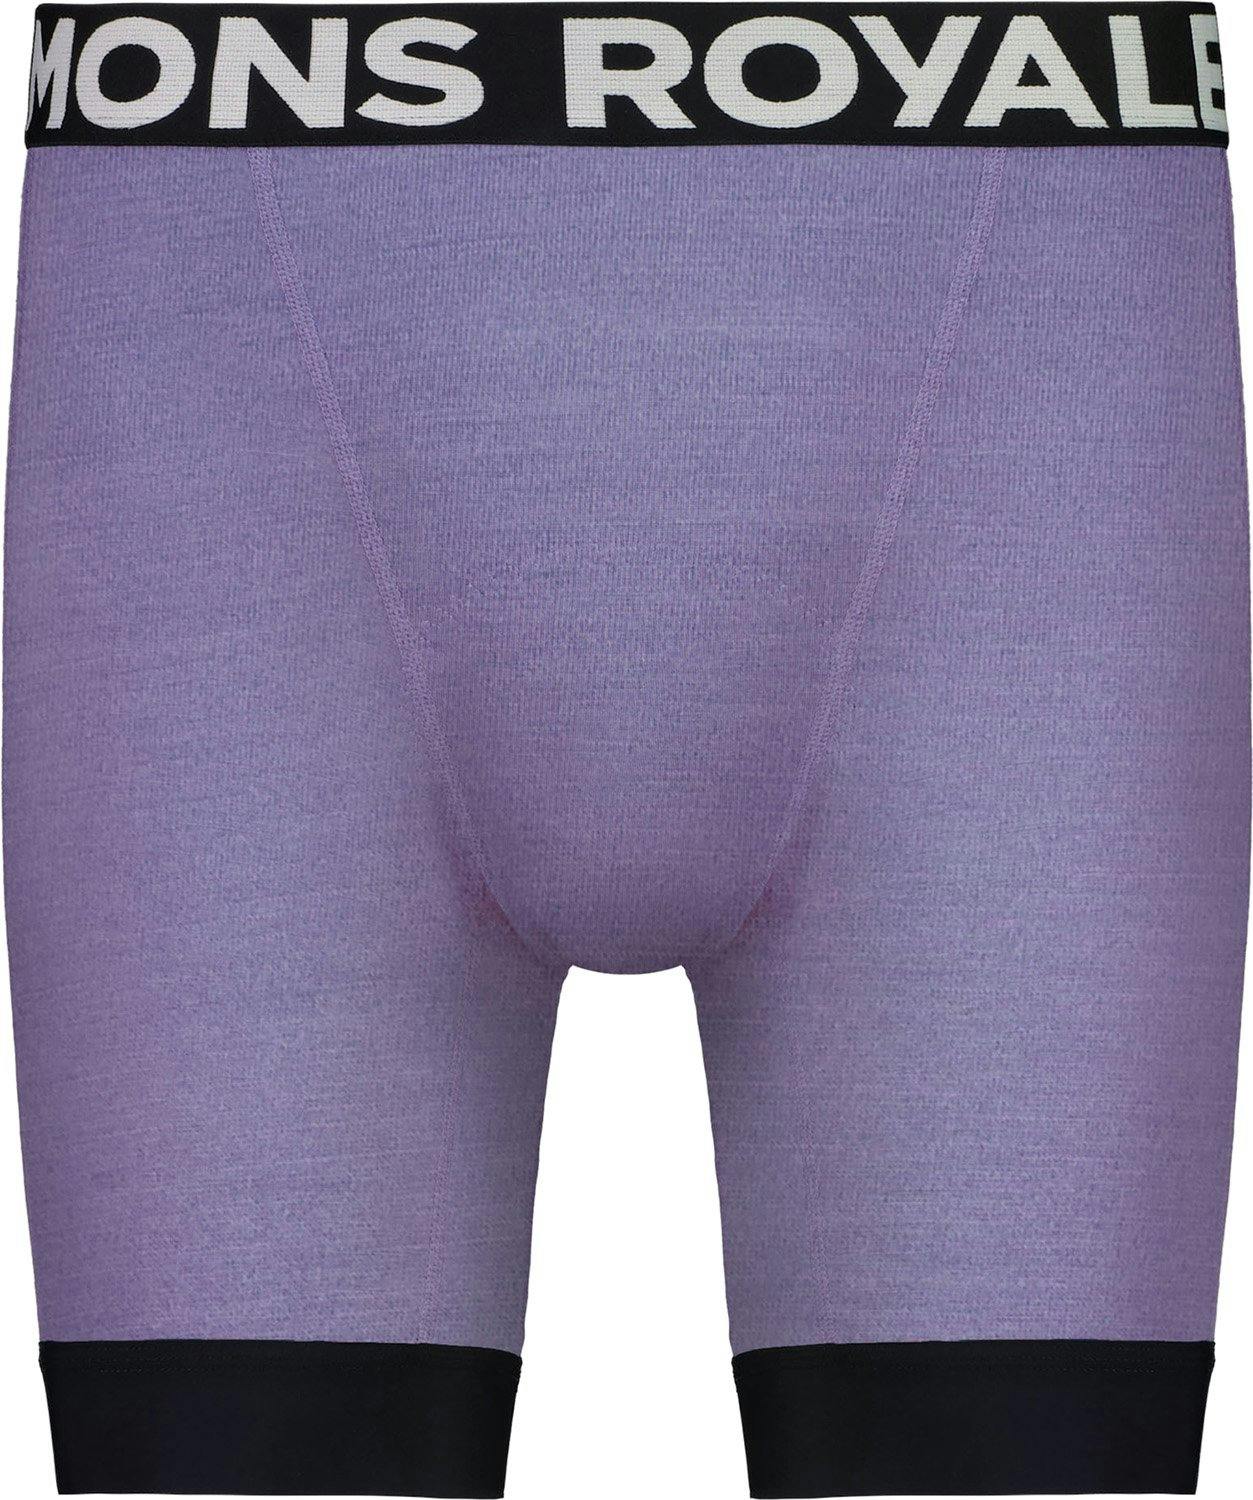 Product image for Epic Merino Shift Bike Shorts Liner - Men's